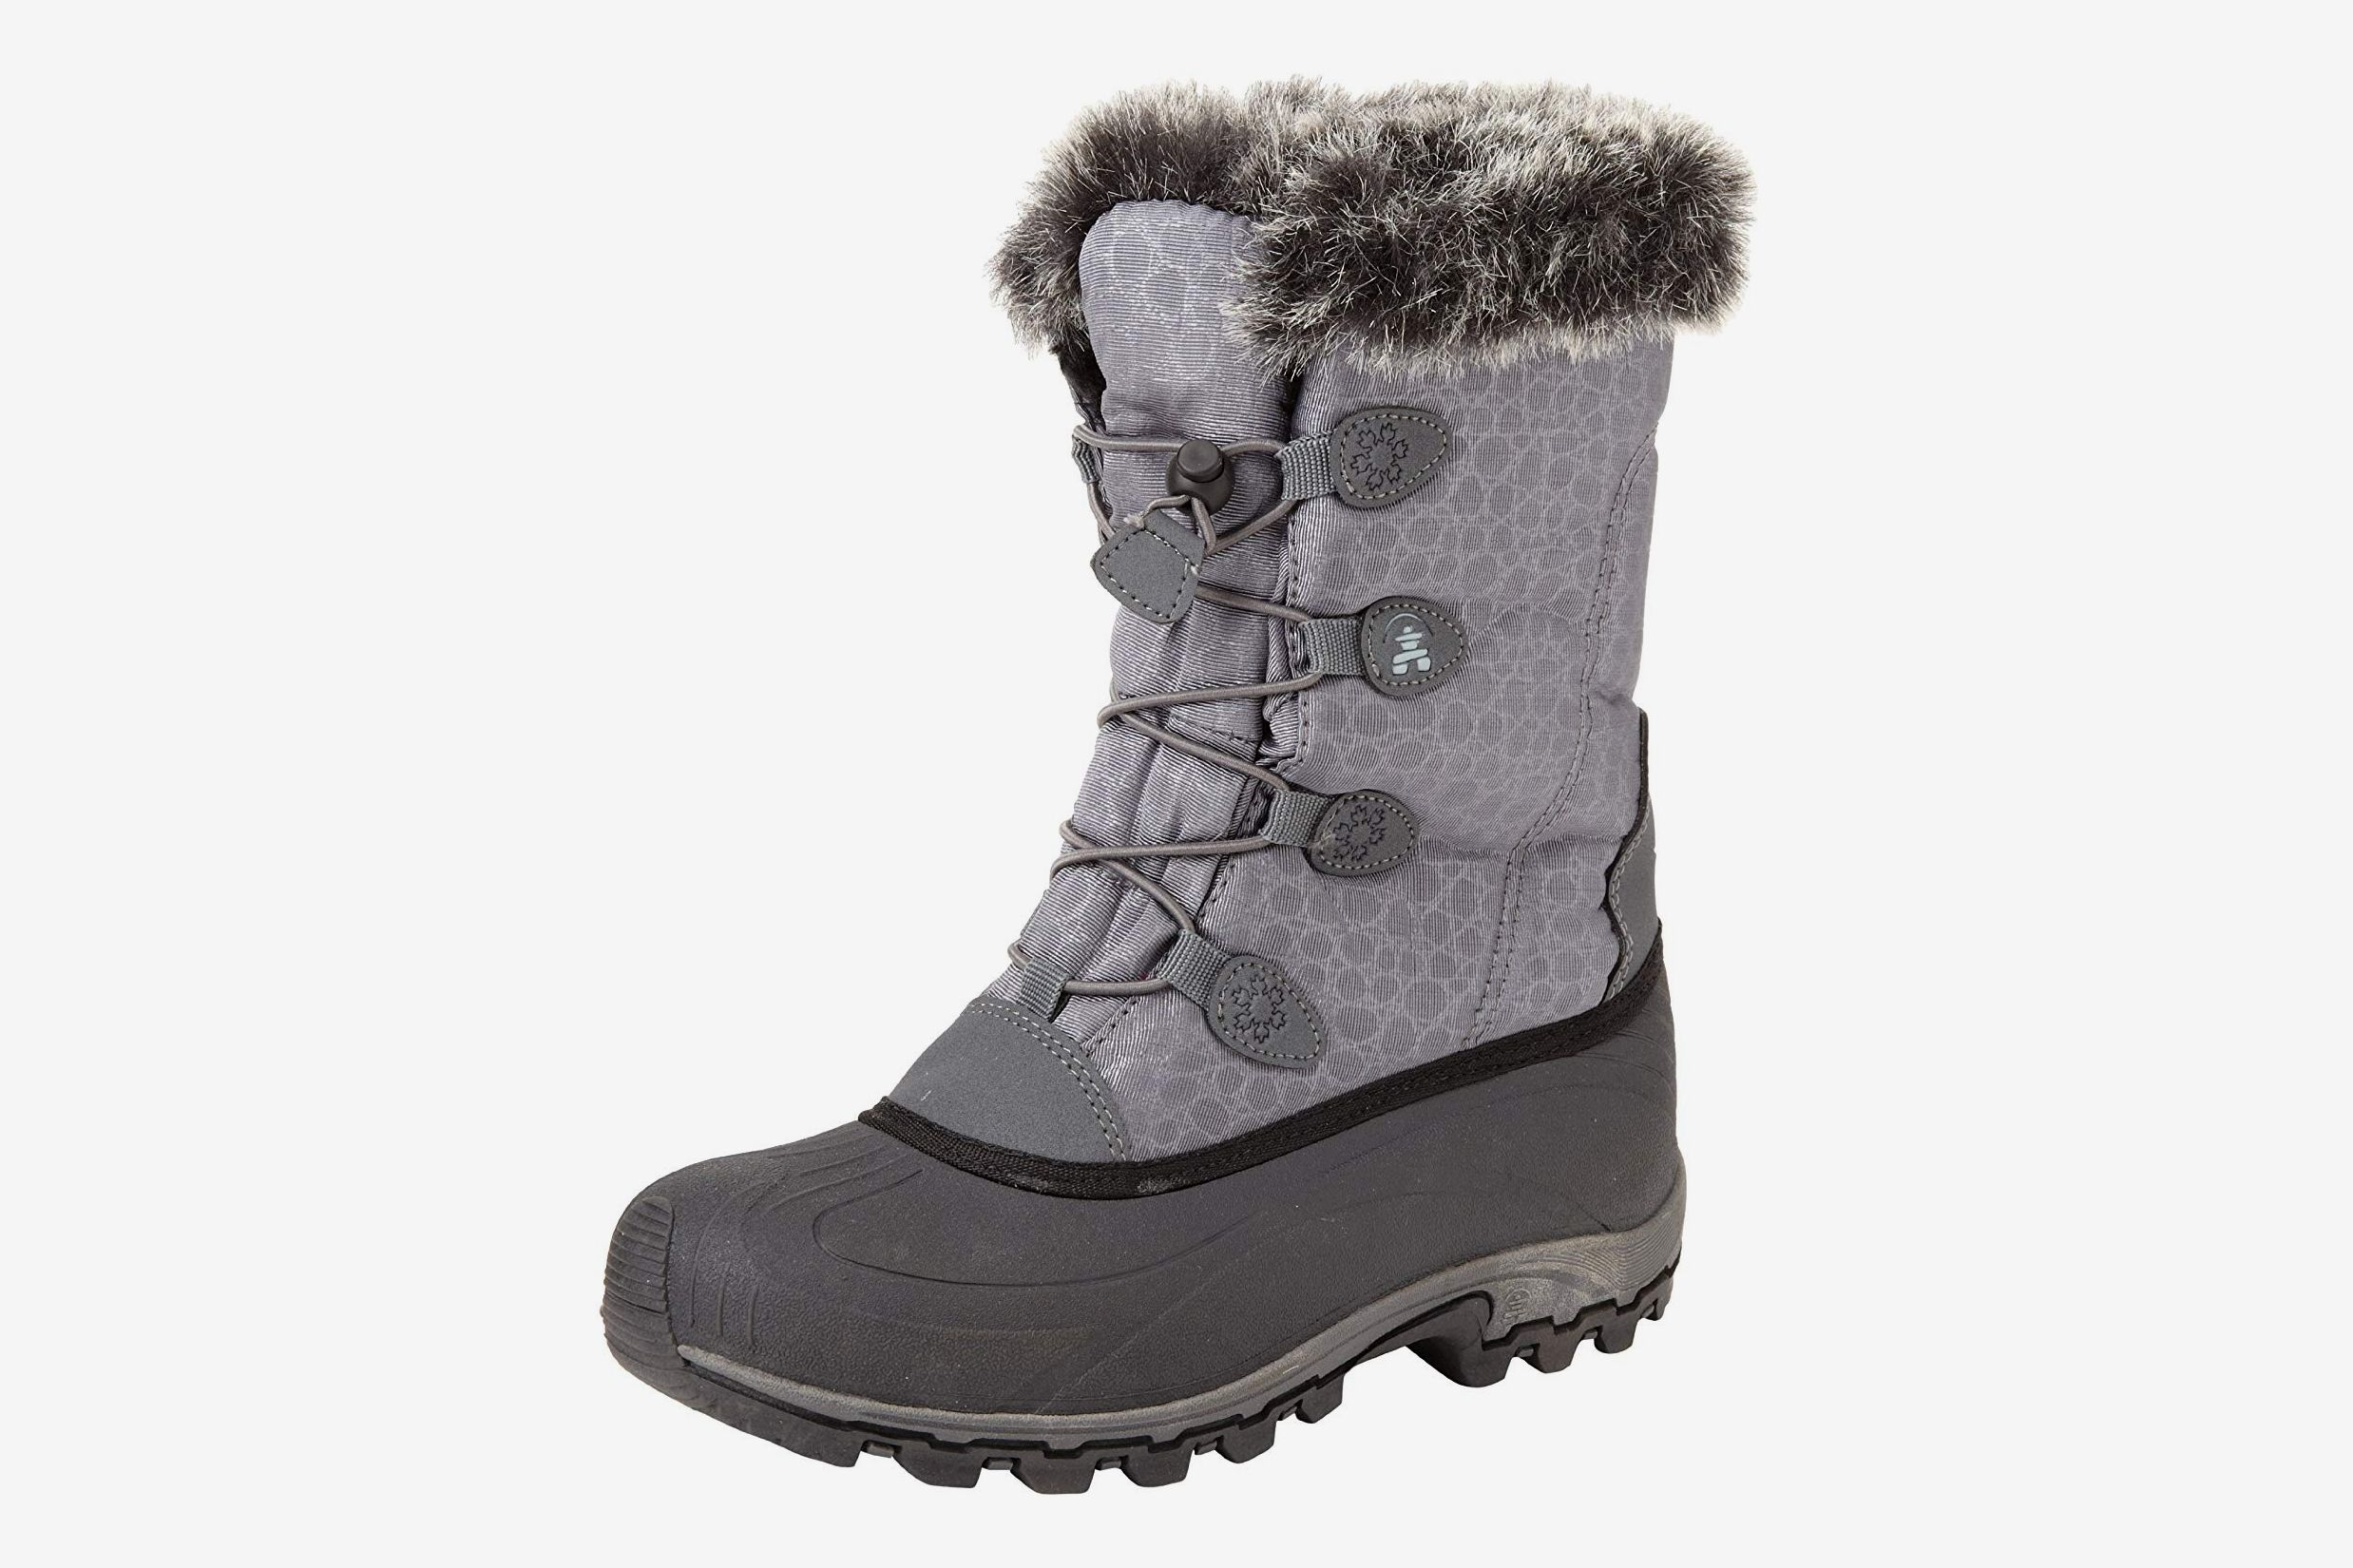 snow boots waterproof flexible women winter shoes rain zipper anti slip hot 2019 